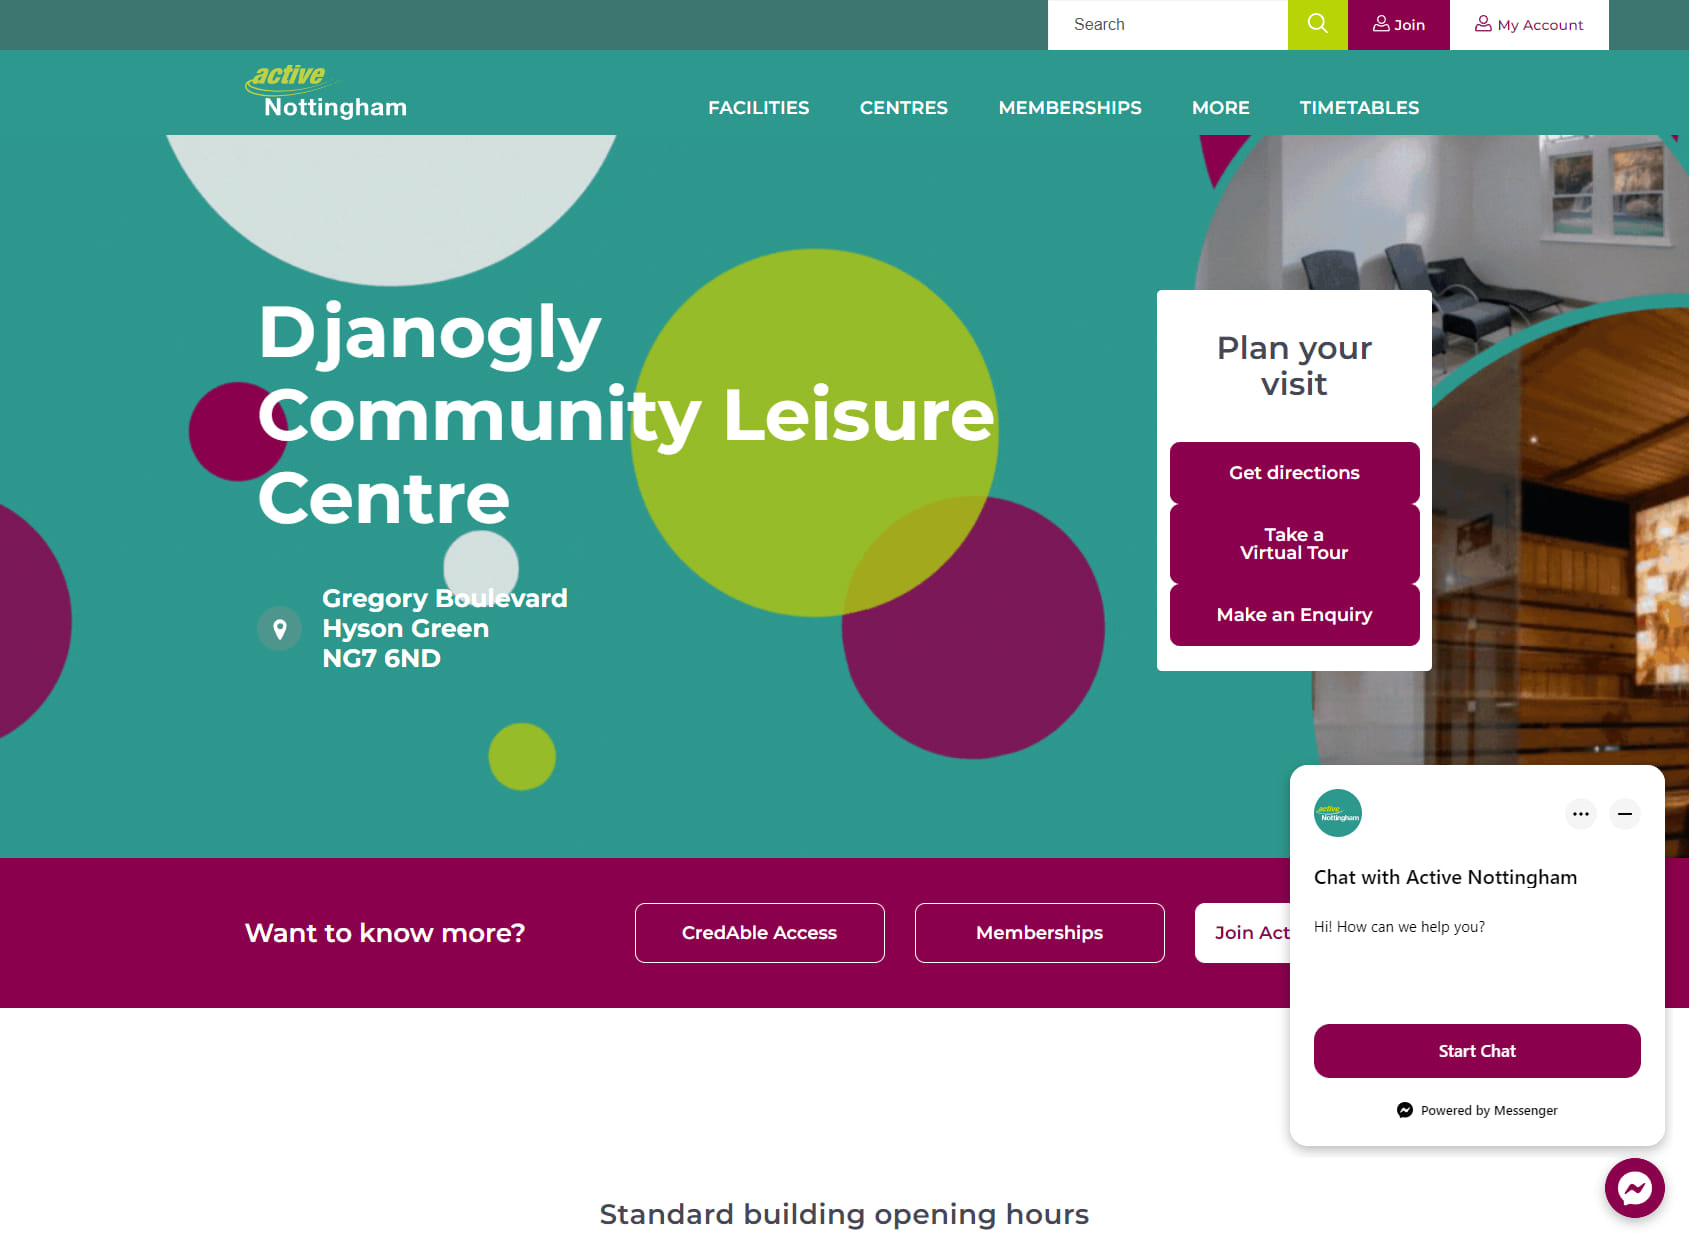 Djanogly Community Leisure Centre